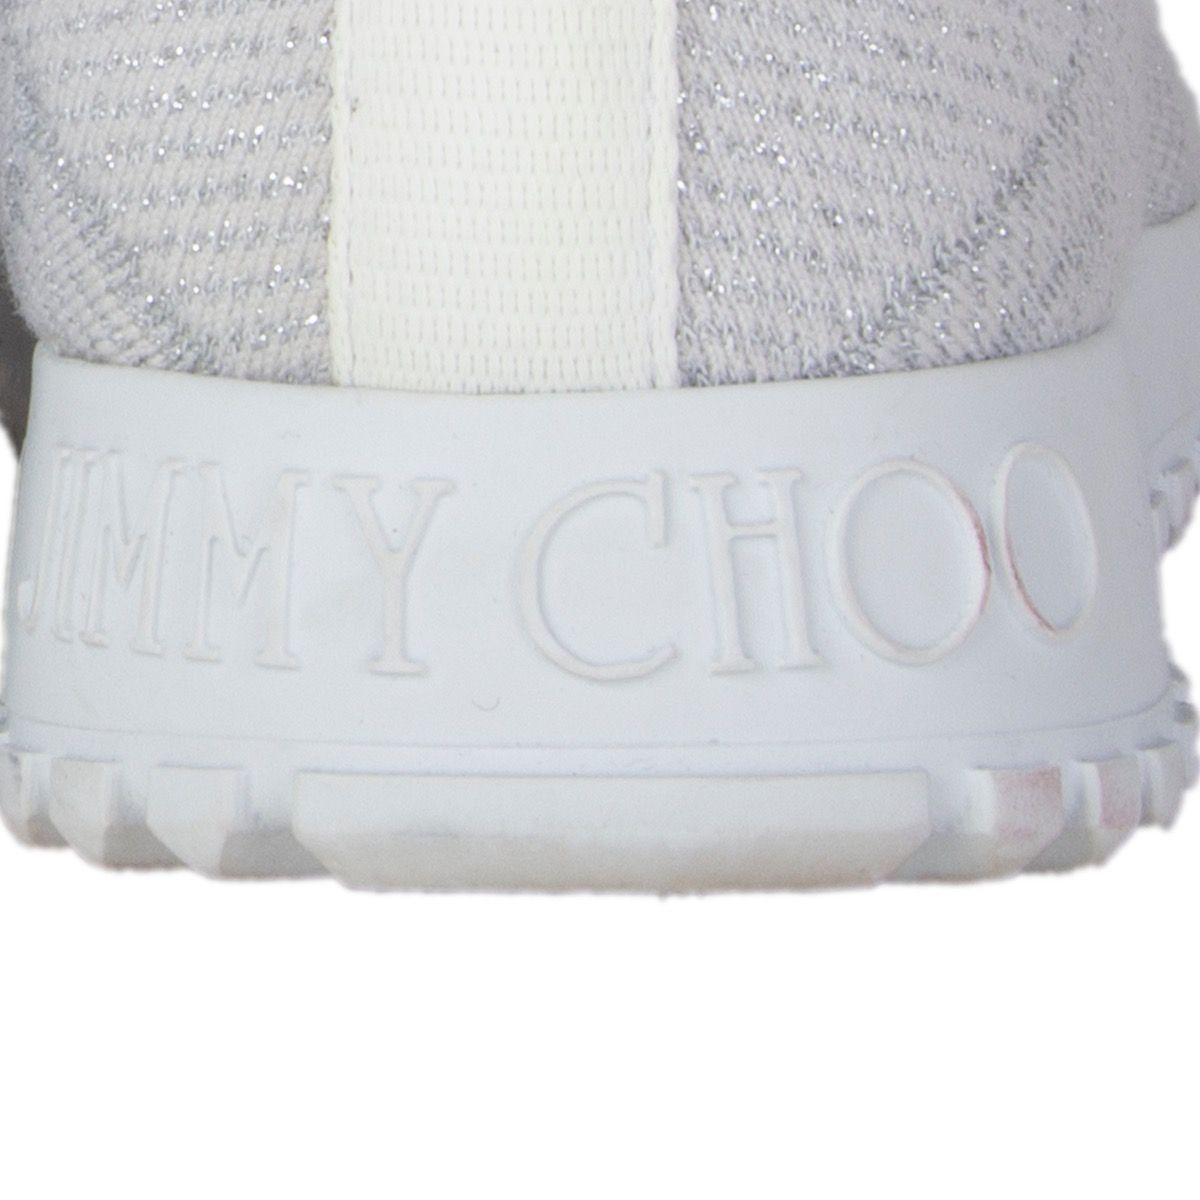 Jimmy Choo 'Norway' Knit Sneakers